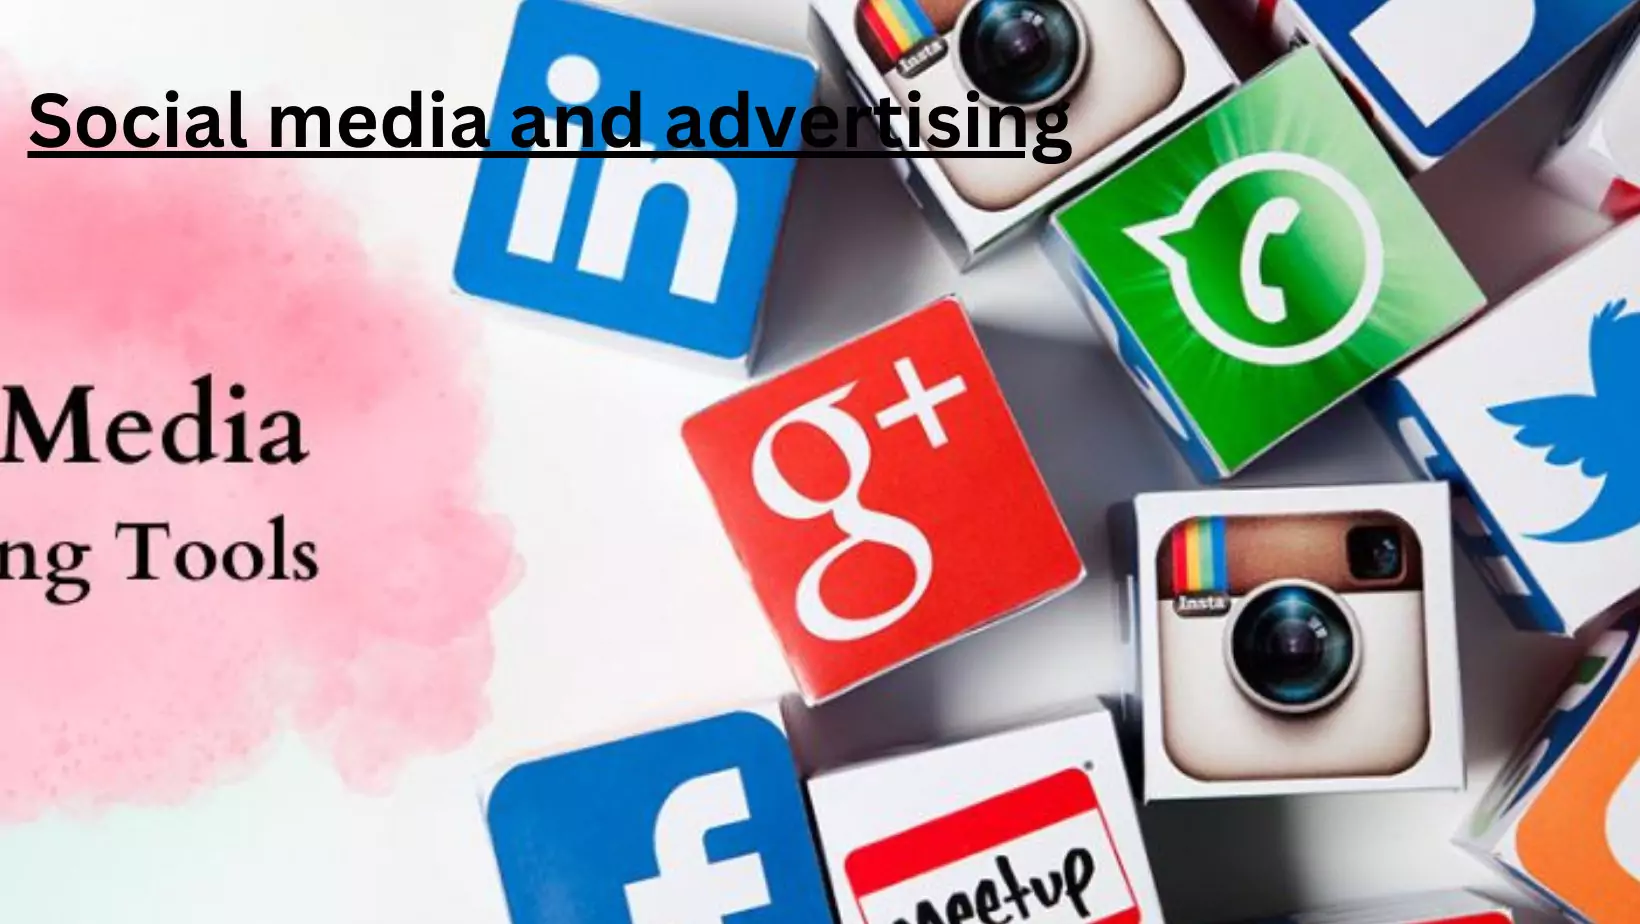 Social media and advertising